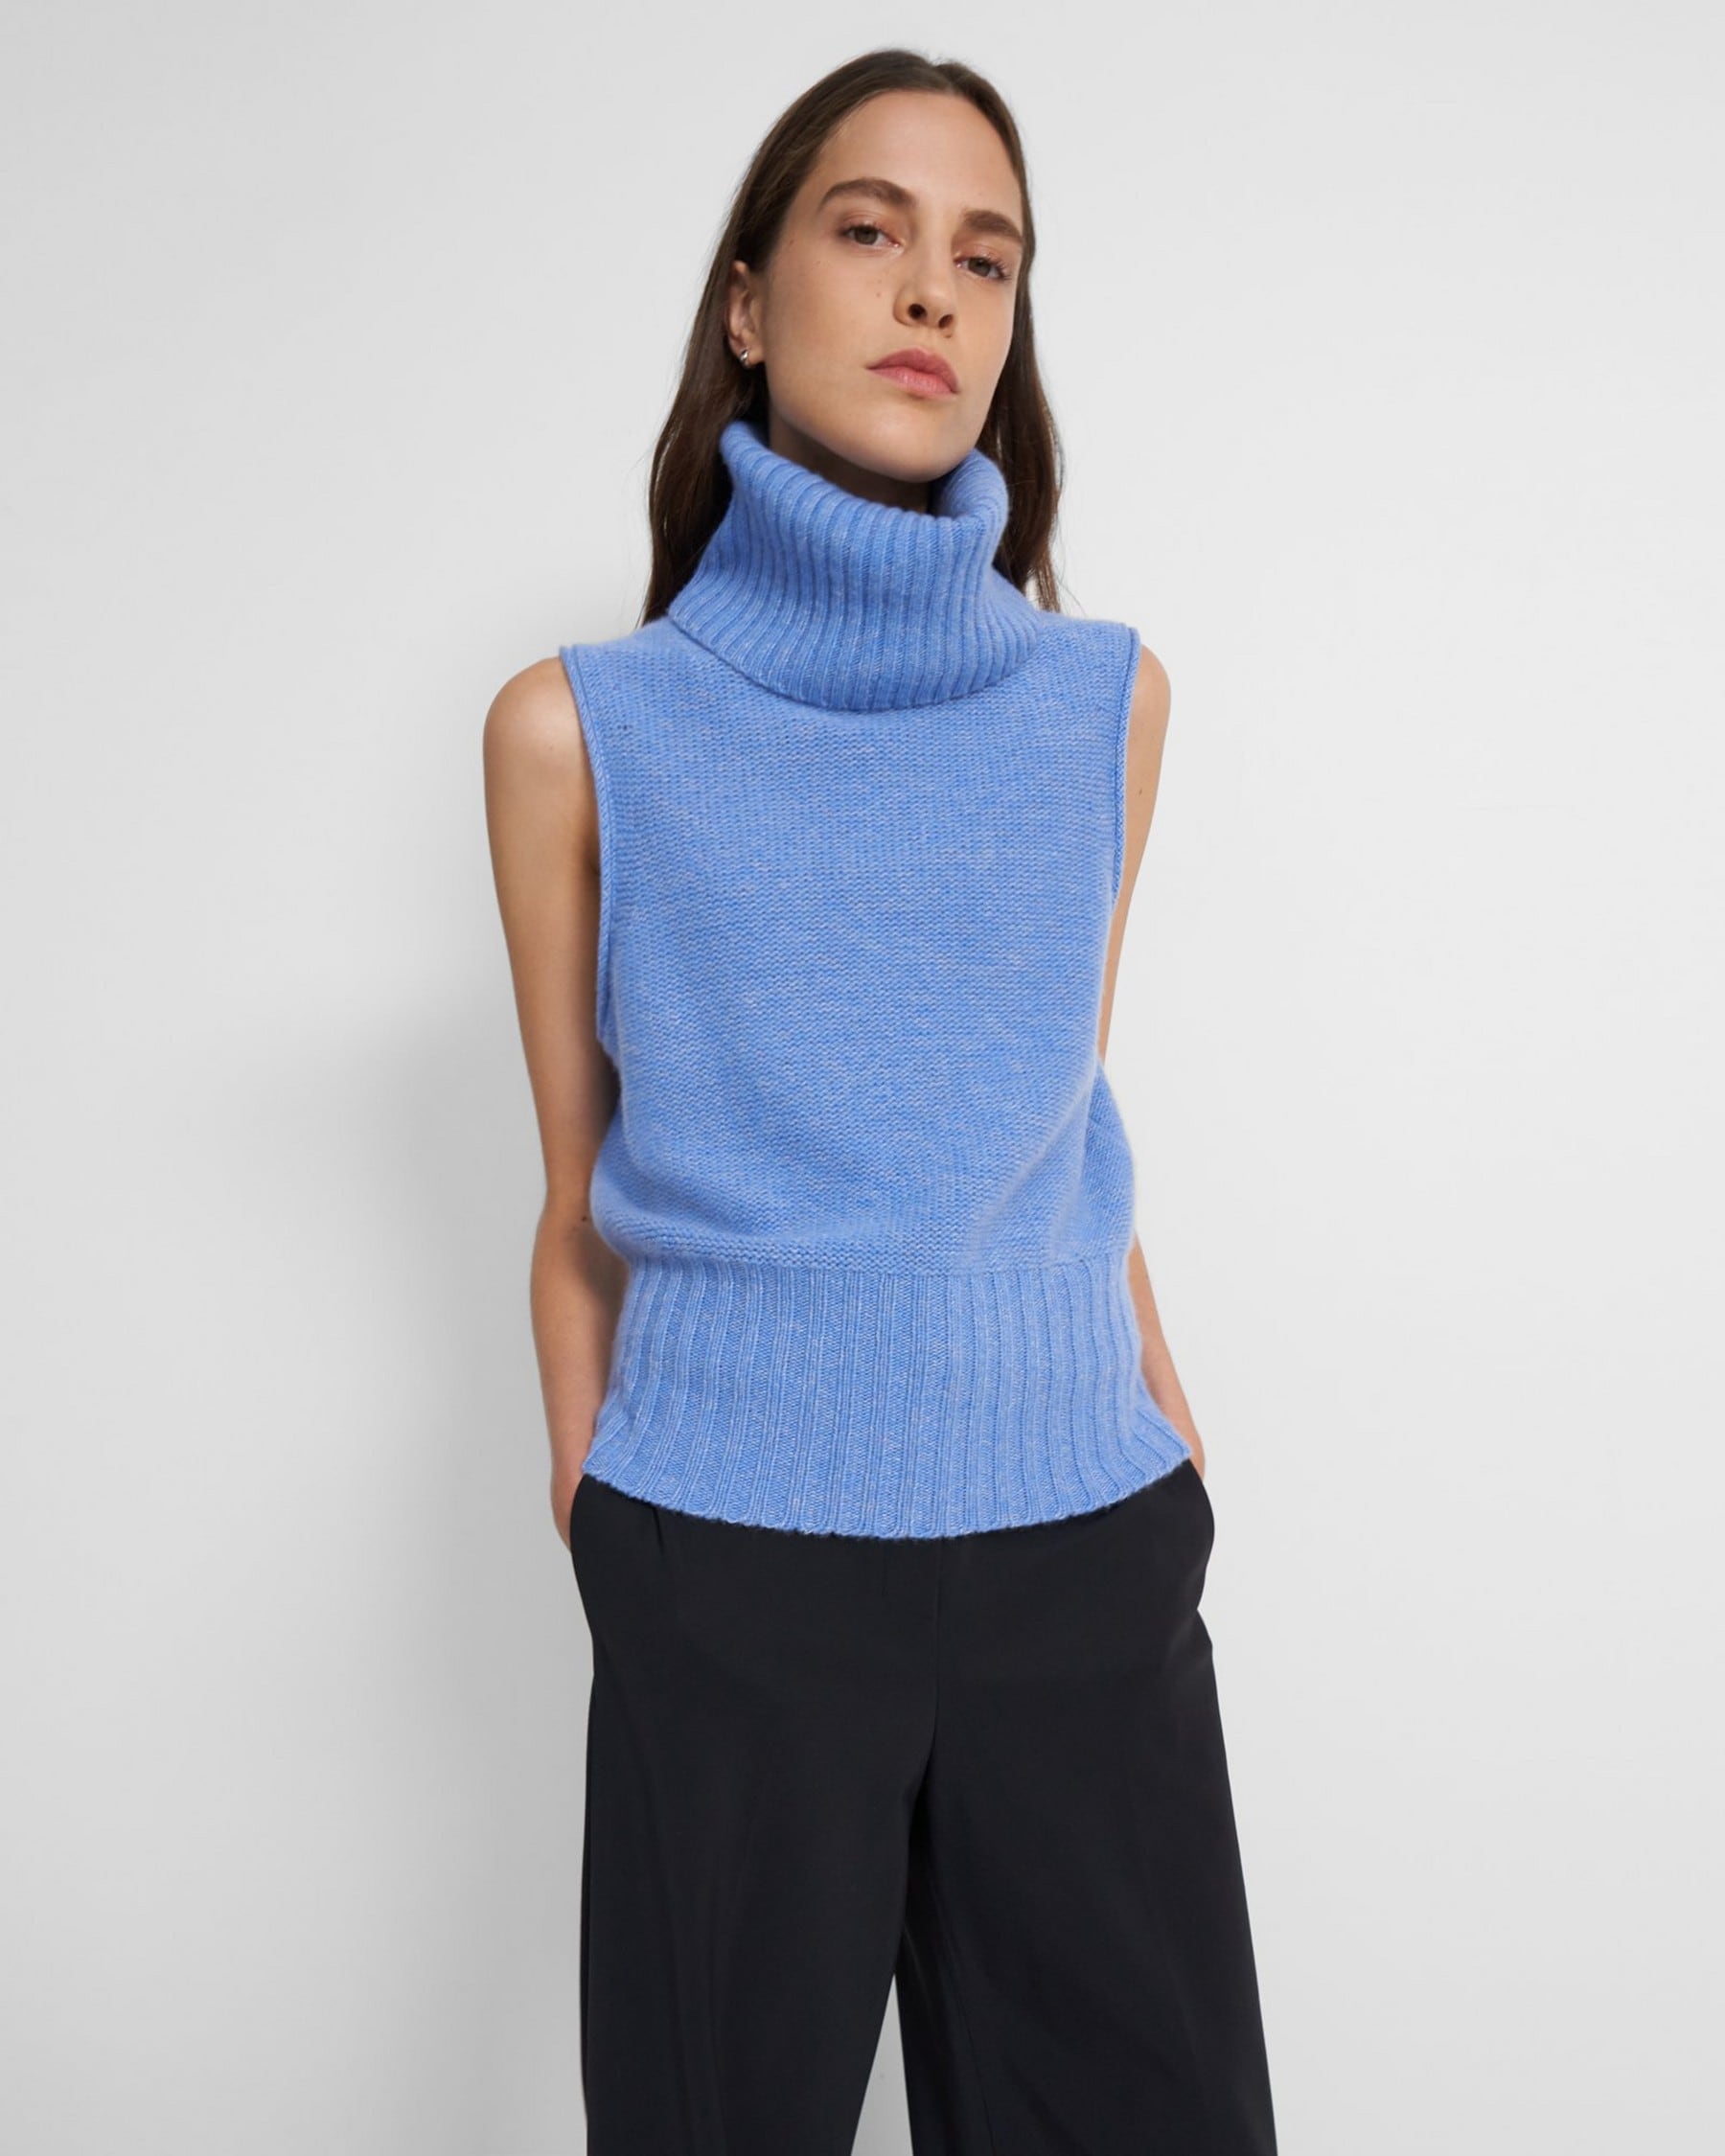 Sleeveless Turtleneck Sweater in Cashmere